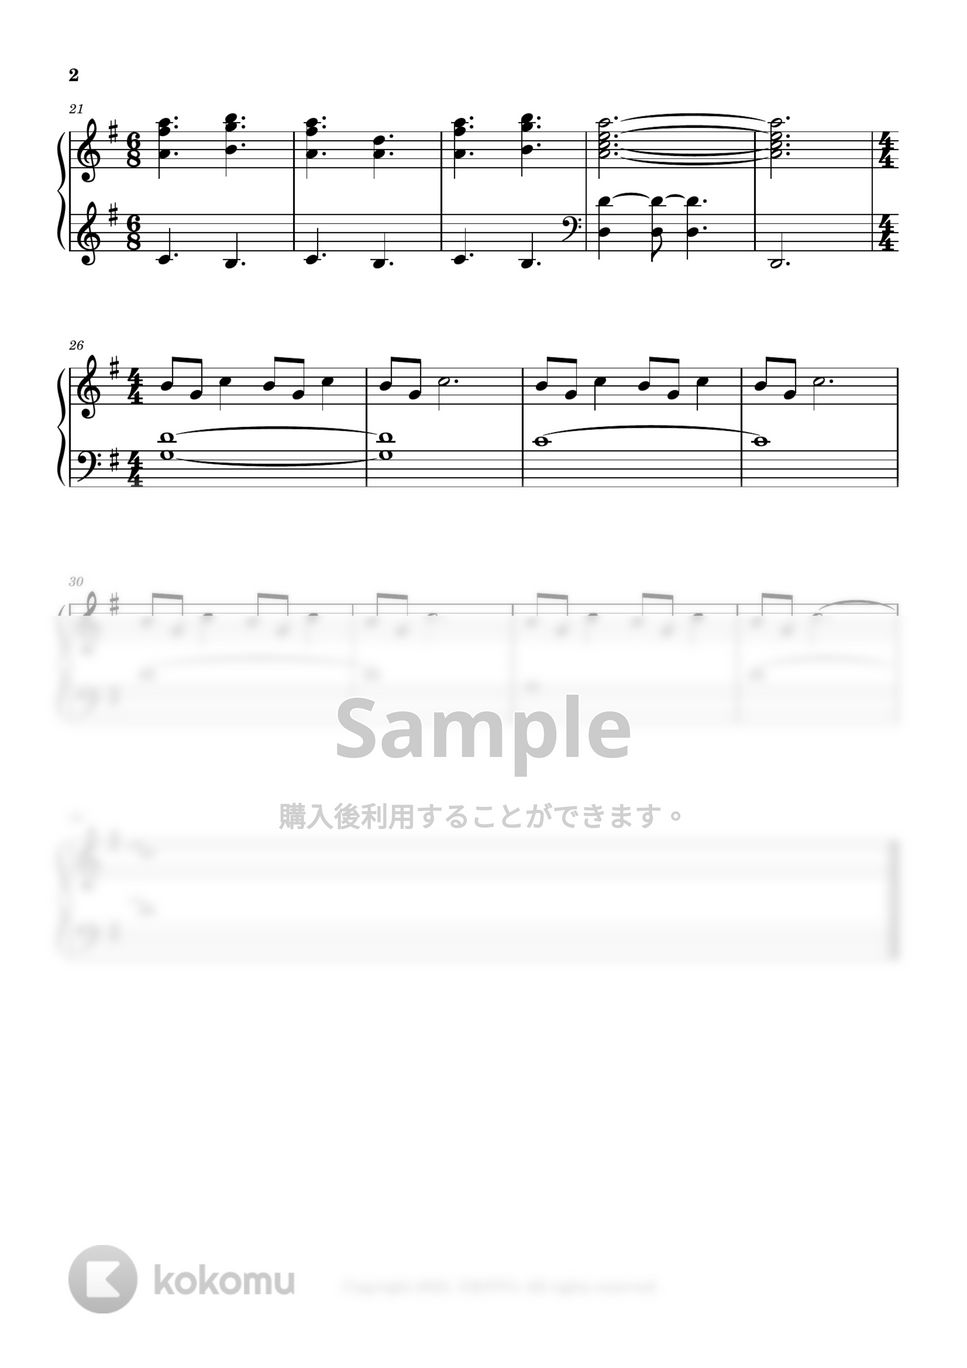 Seiji Kameda - 始まりの朝 (今夜、世界からこの恋が消えても track 1) by 今日ピアノ(Oneul Piano)